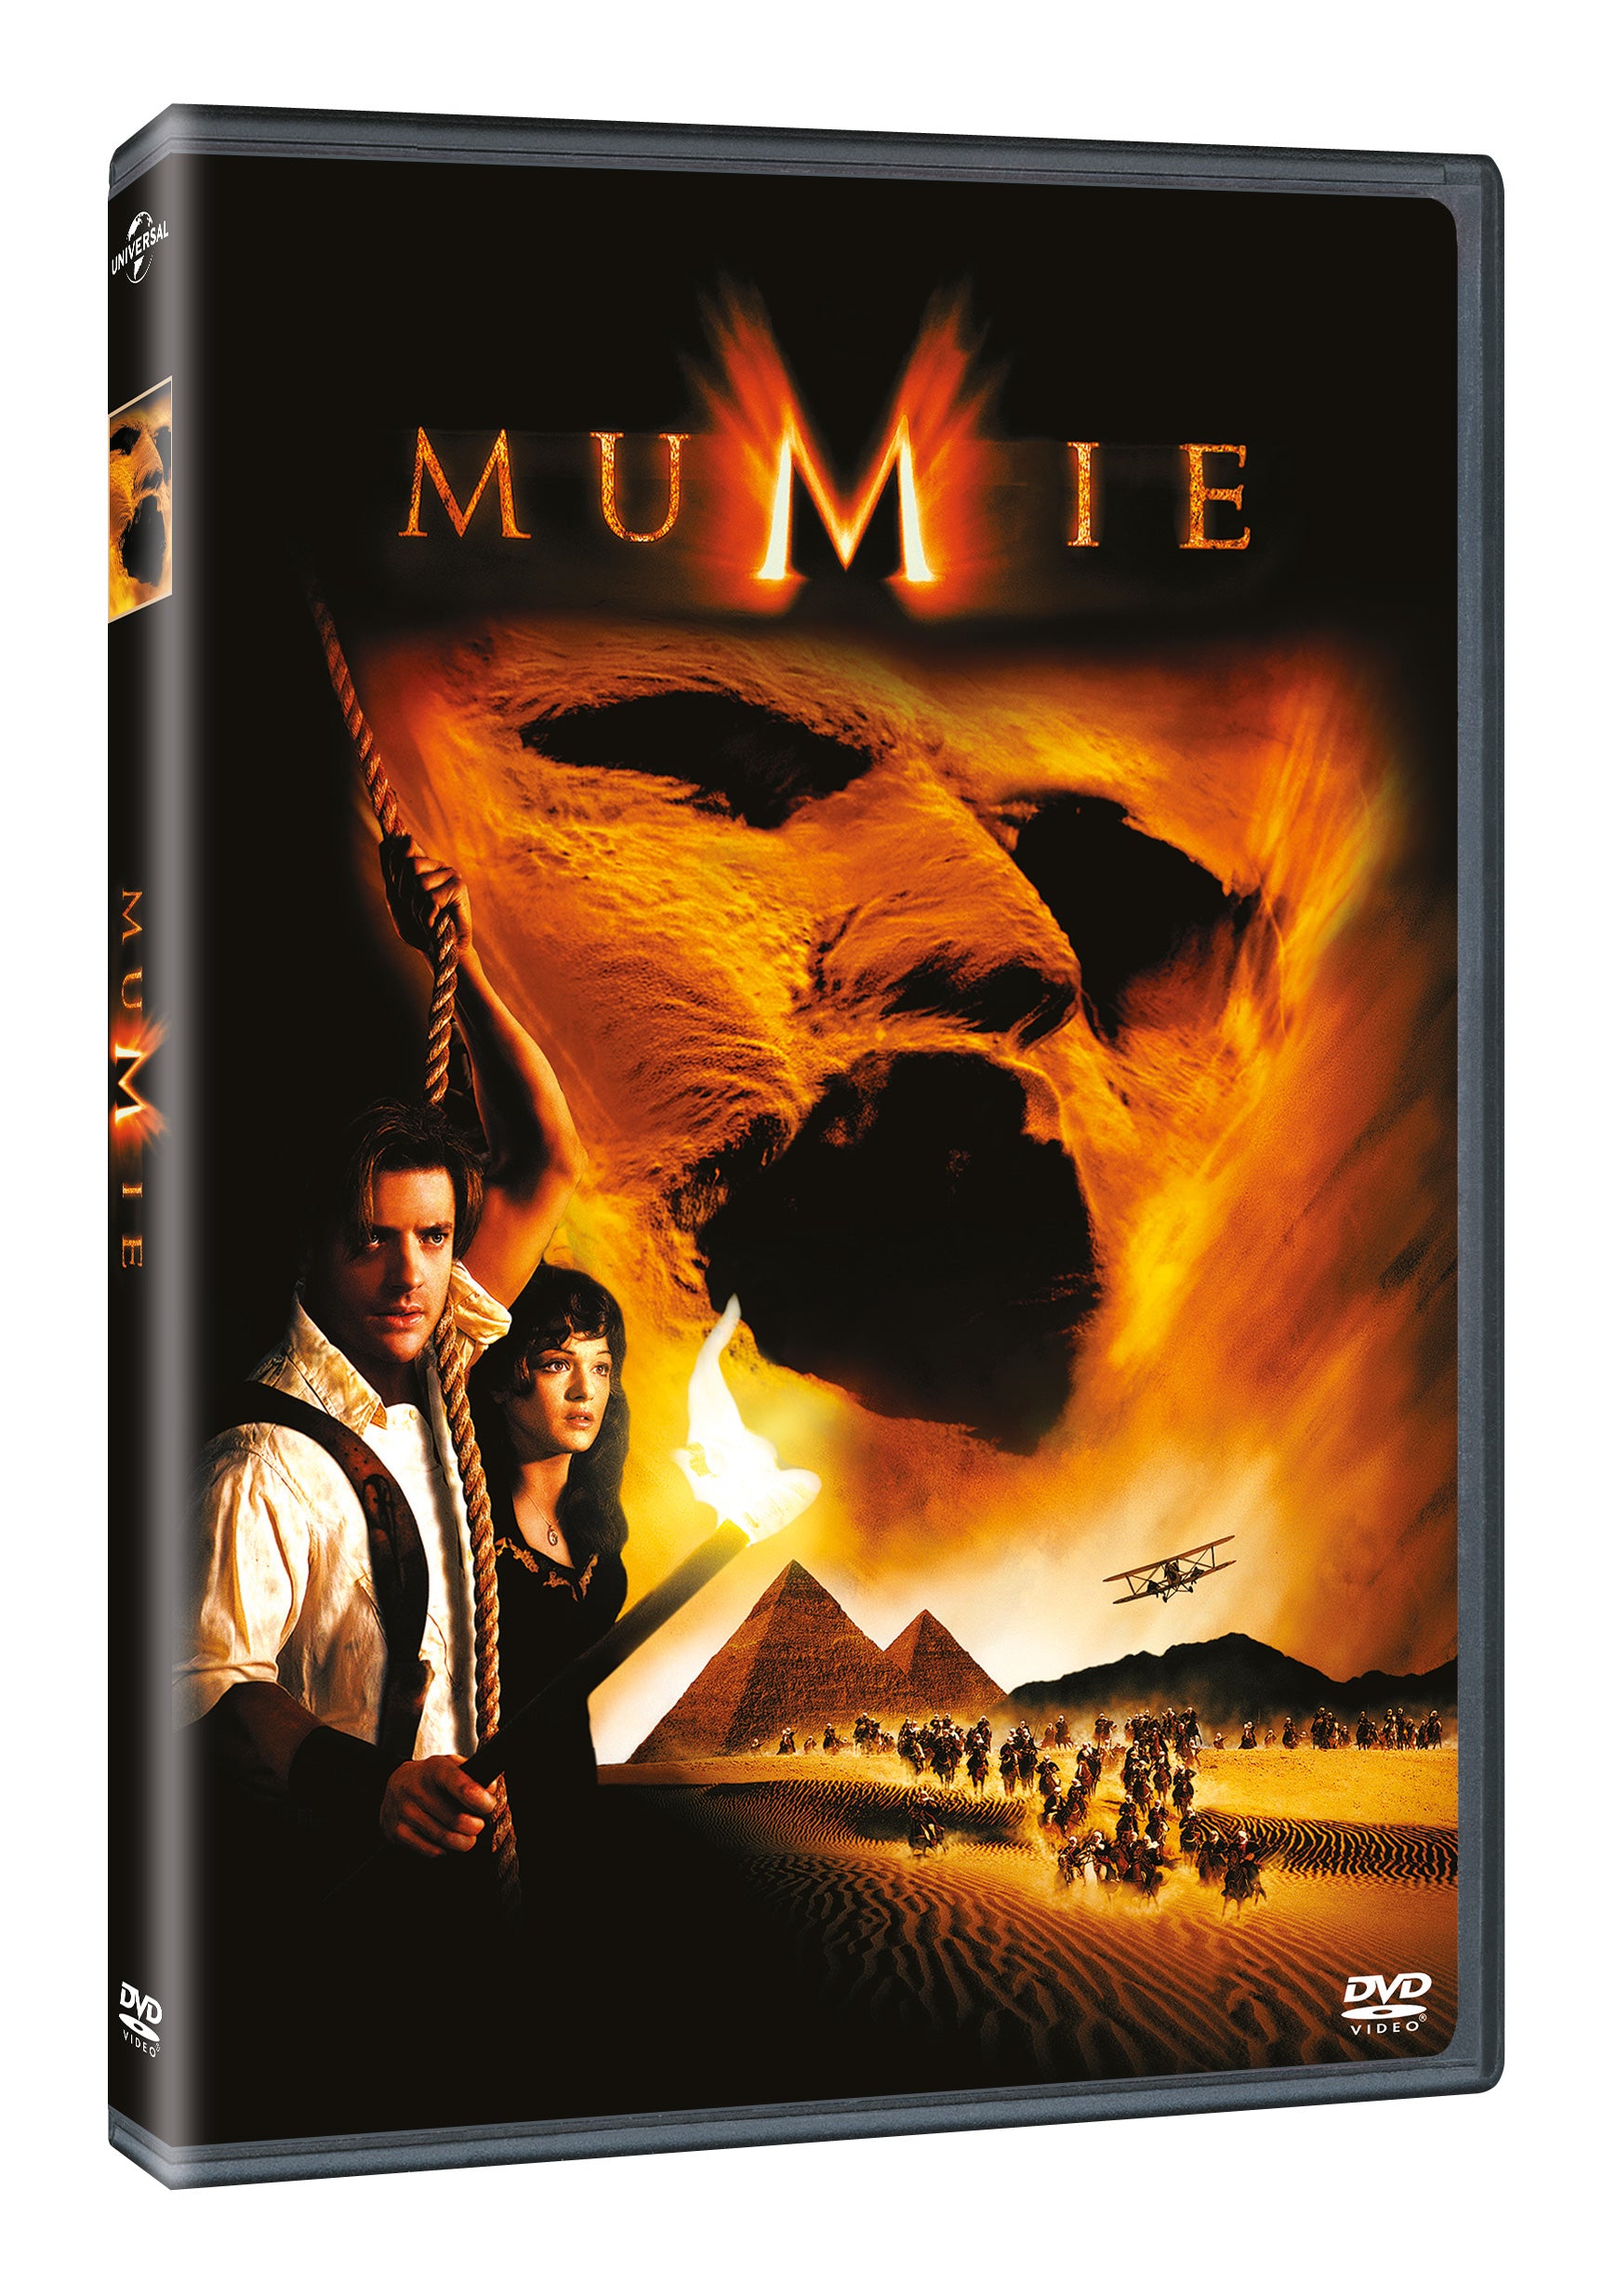 Mumie DVD (1999) / Die Mumie